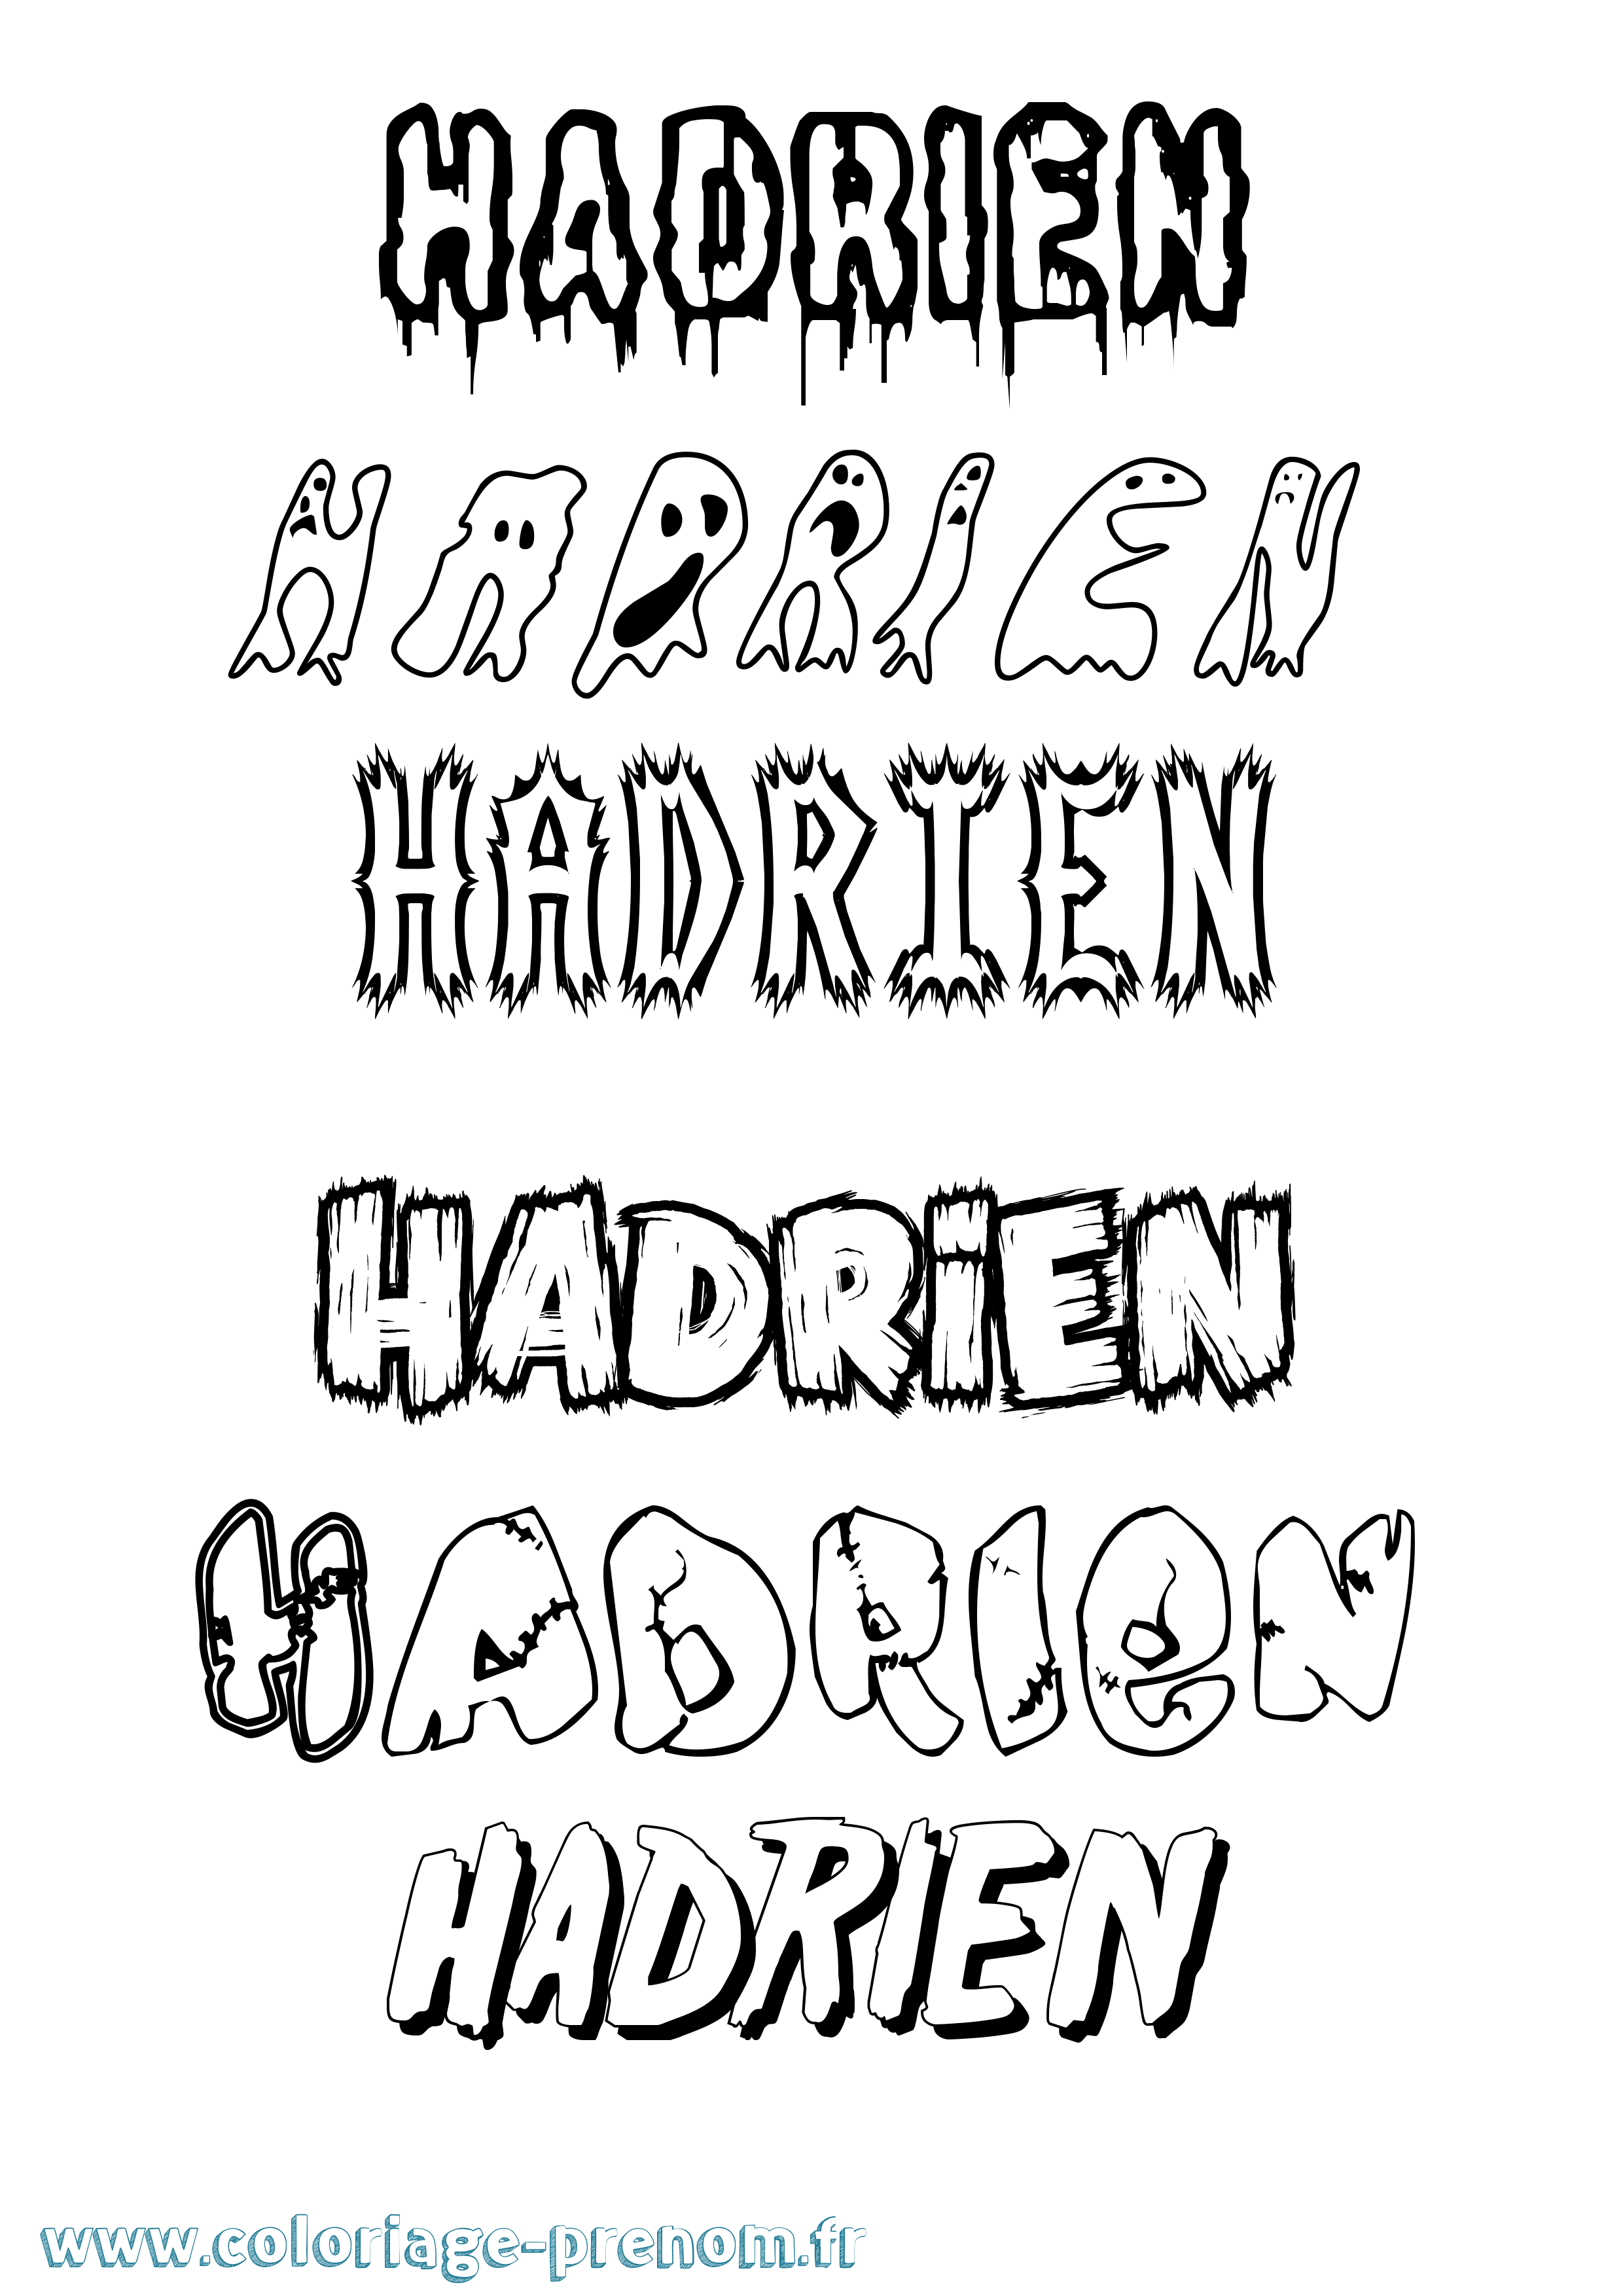 Coloriage prénom Hadrien Frisson